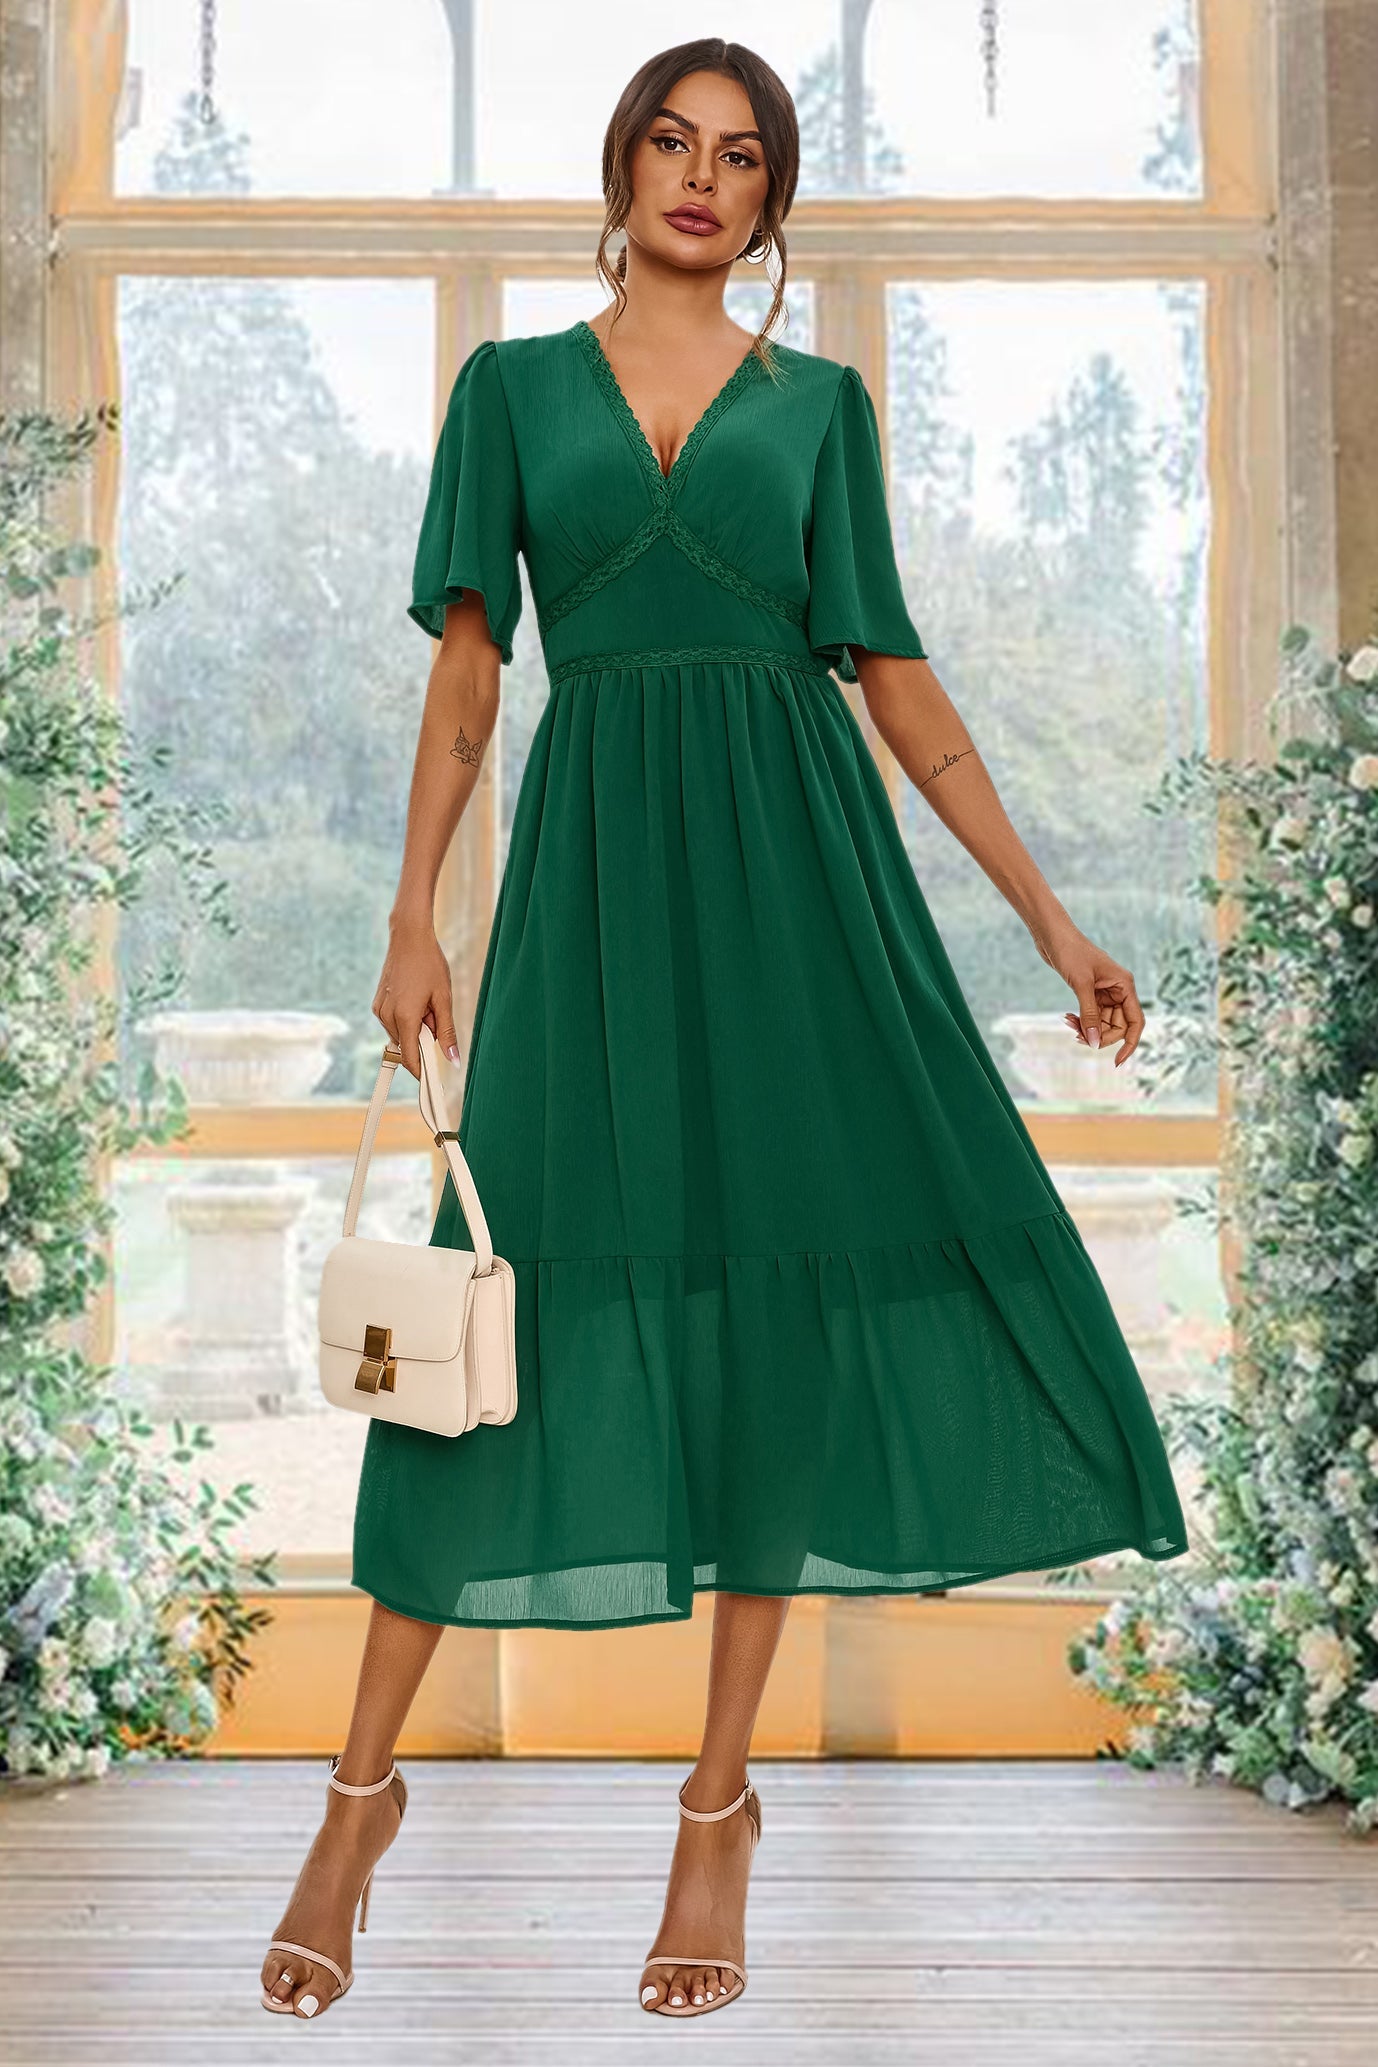 Lace Trim Deep V Neck Angel Sleeve Midi Dress In Green FS661-Green